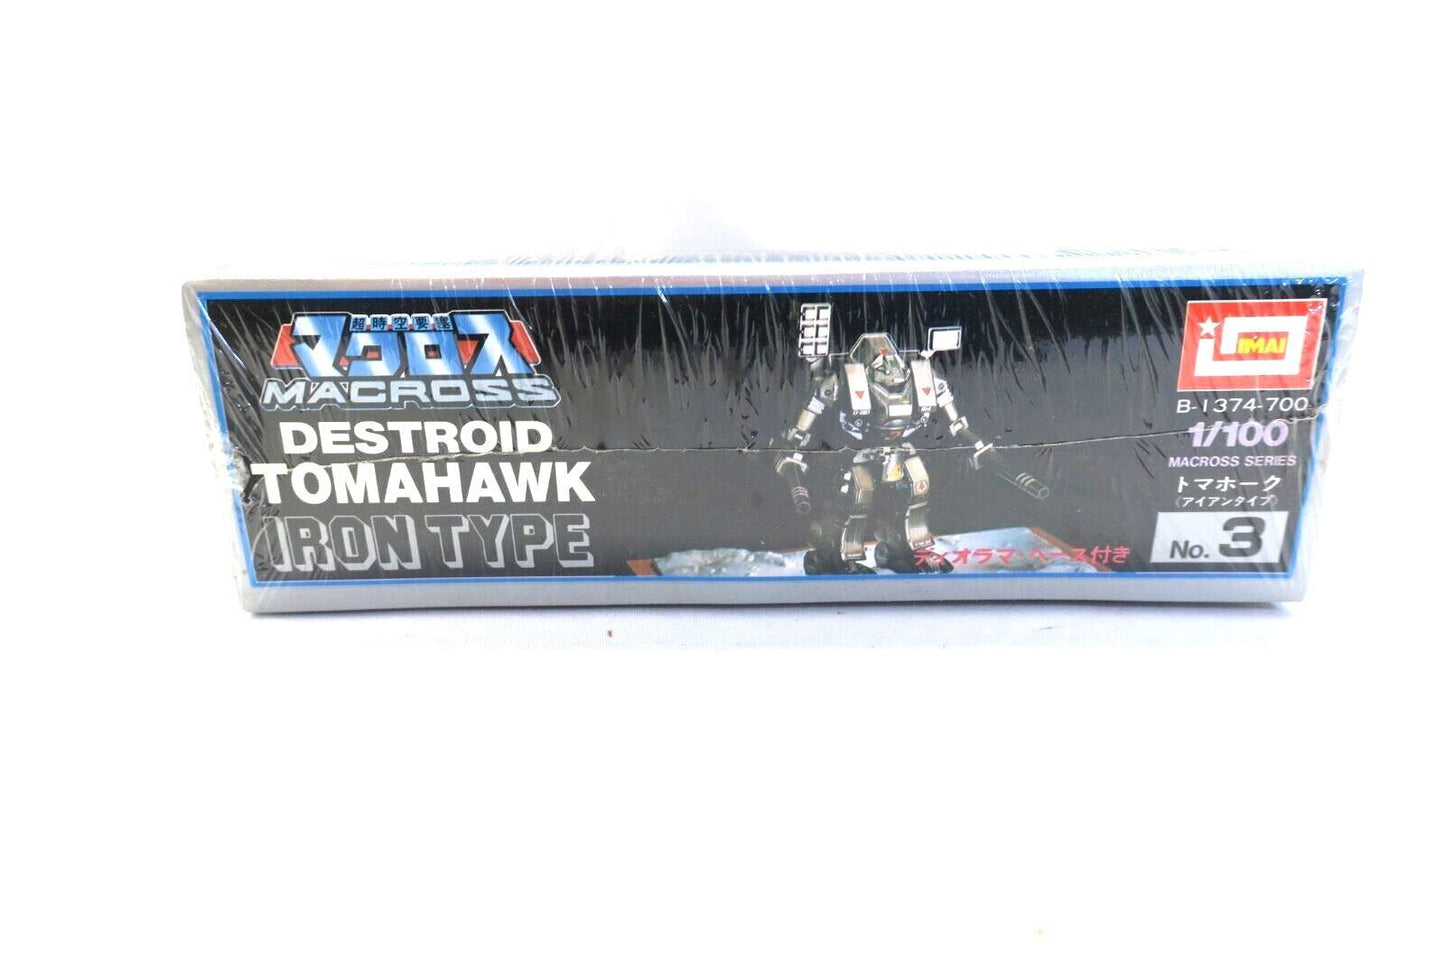 Macross Destroid Tomahawk Iron Type 1/100 Scale Plastic Model Kit IMAI Vintage